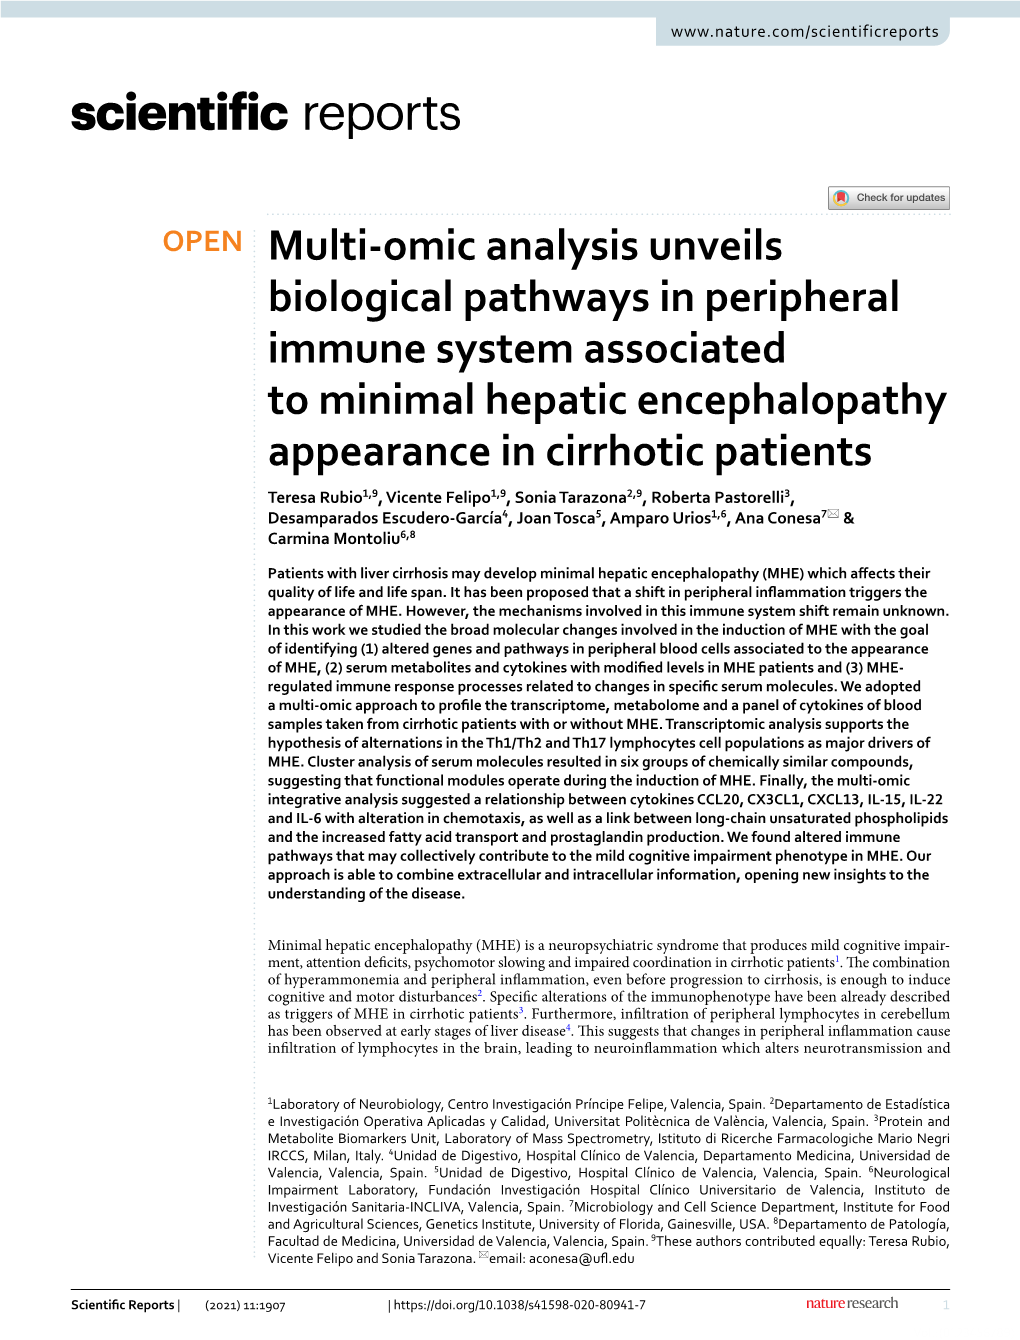 Multi-Omic Analysis Unveils Biological Pathways in Peripheral Immune